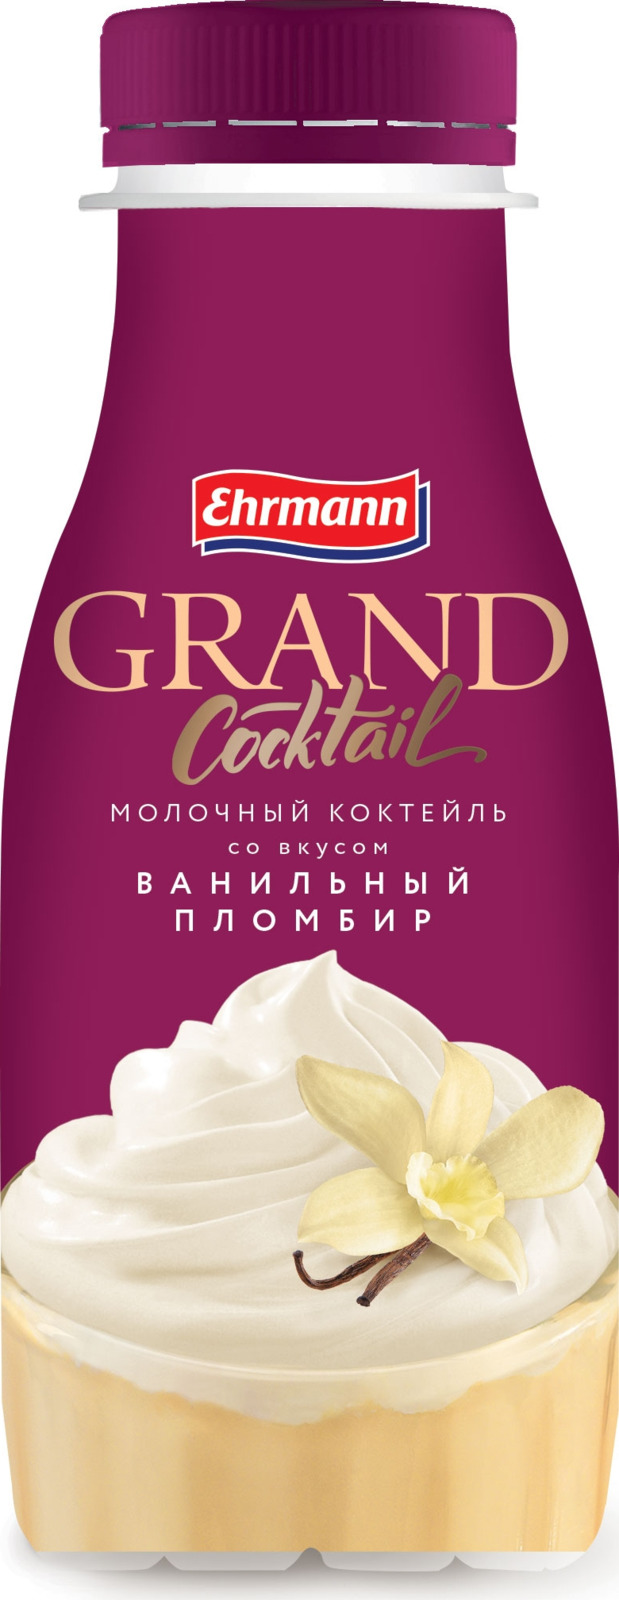 Молочный коктейль Grand Coctail Ванильный пломбир, 4%, 260 г